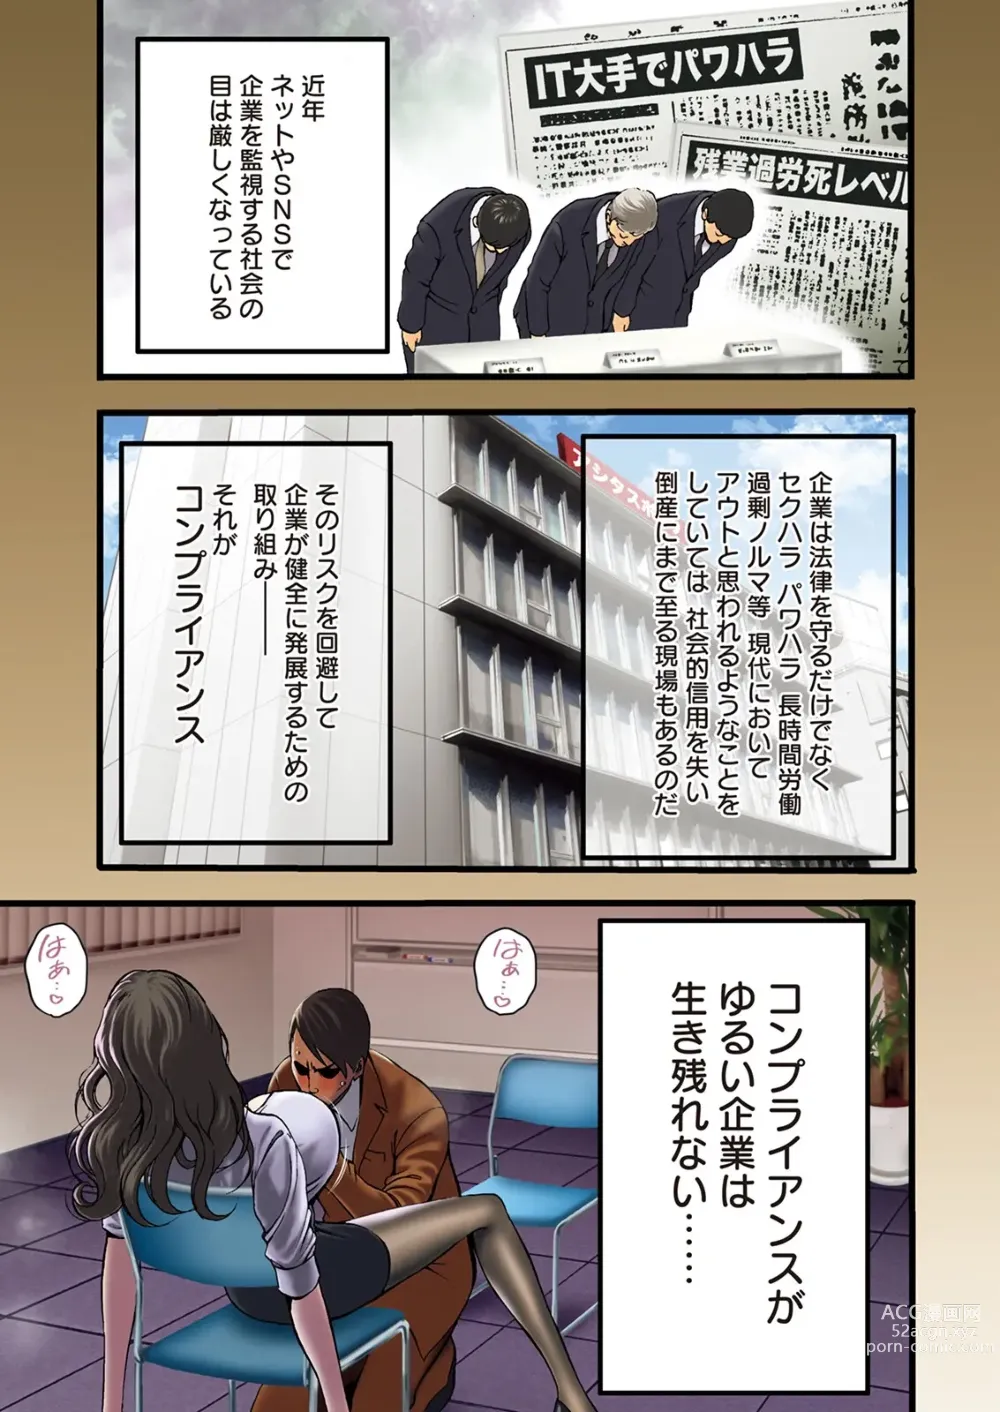 Page 2 of manga Compliance Yuruyuru Chimarisan 1-9